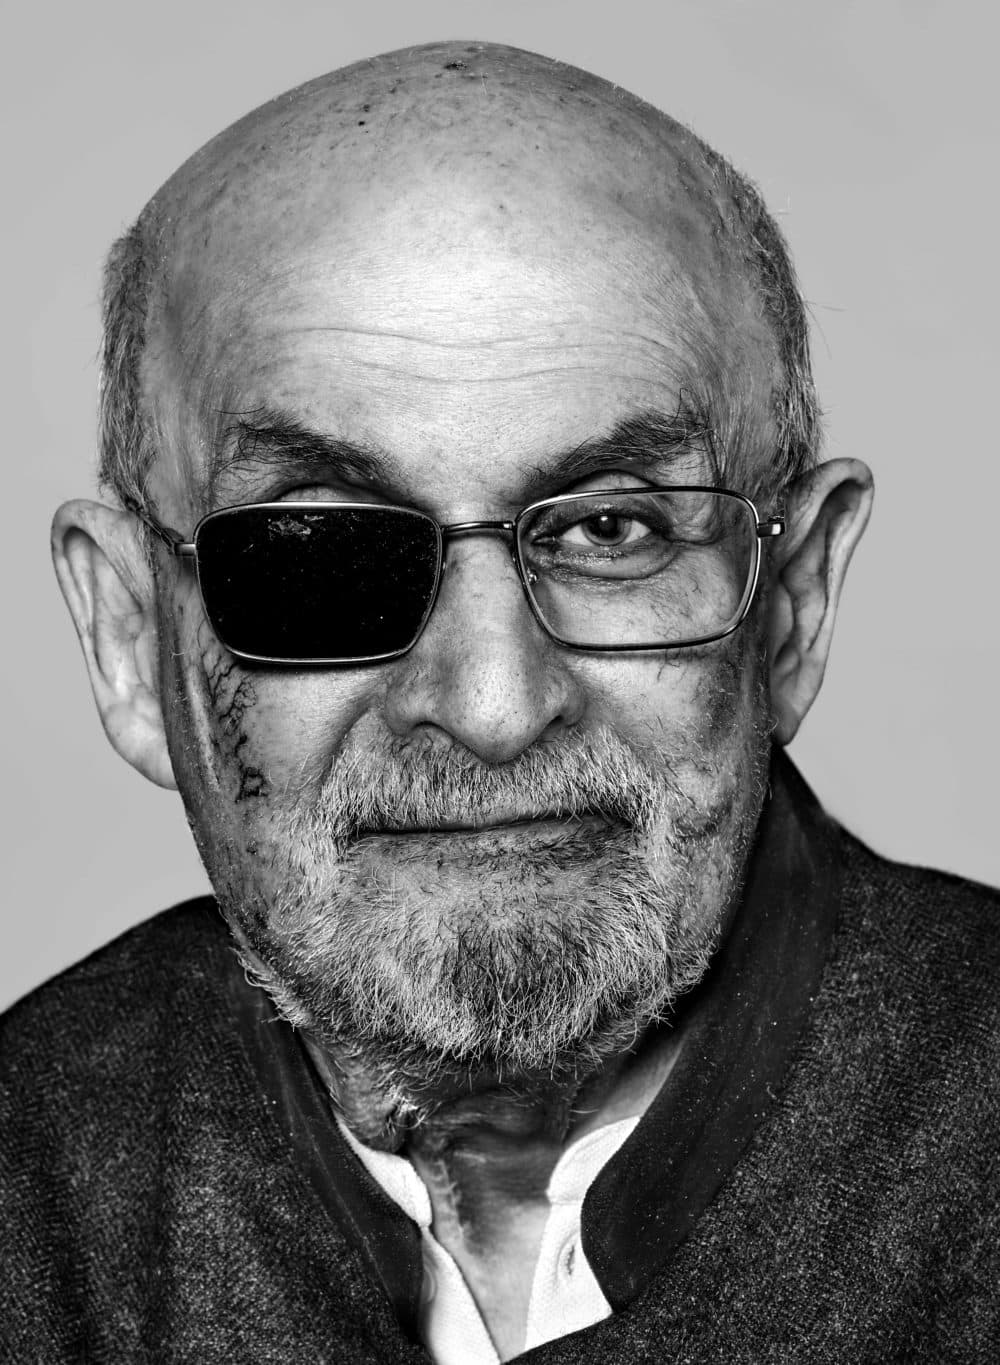 Author Salman Rushdie. (Courtesy of Richard Burbridge for The New Yorker)